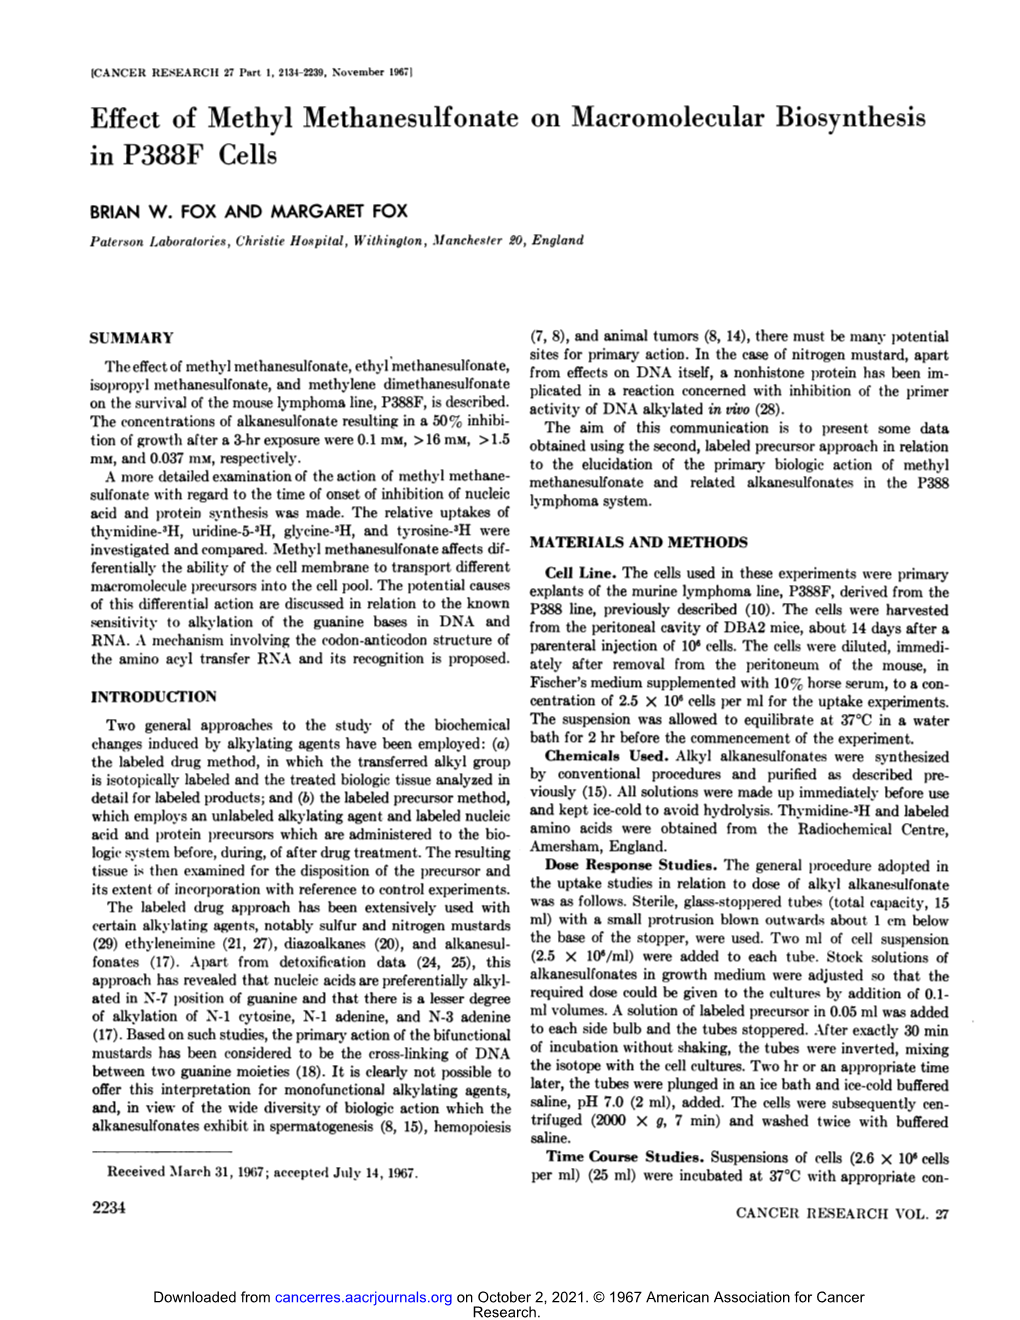 Effect of Methyl Methanesulfonate on Macromolecular Biosynthesis in P388F Cells